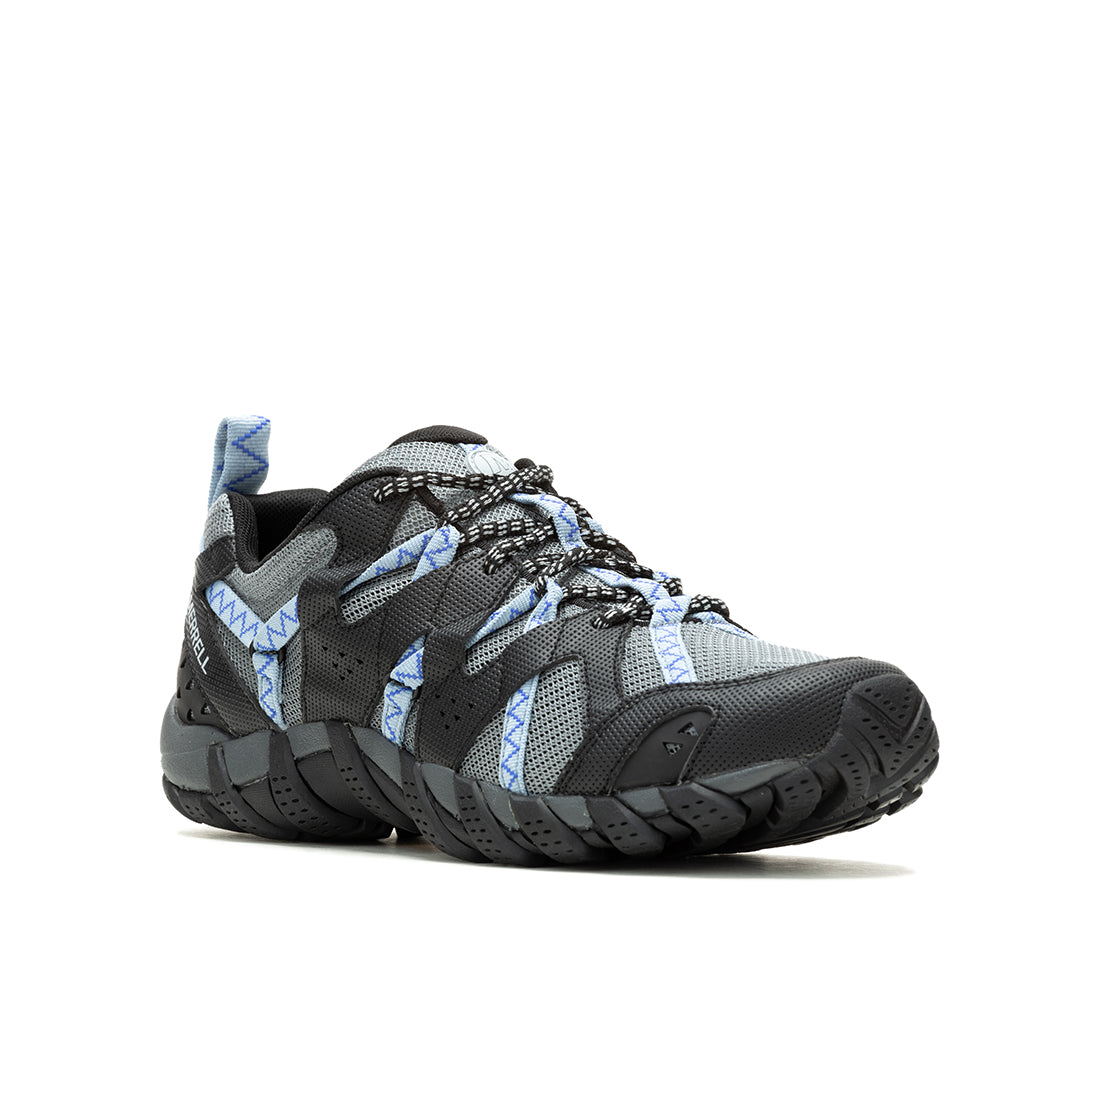 Waterpro Maipo 2 - Black/Chambray Mens Hydro Hiking Shoes - 0